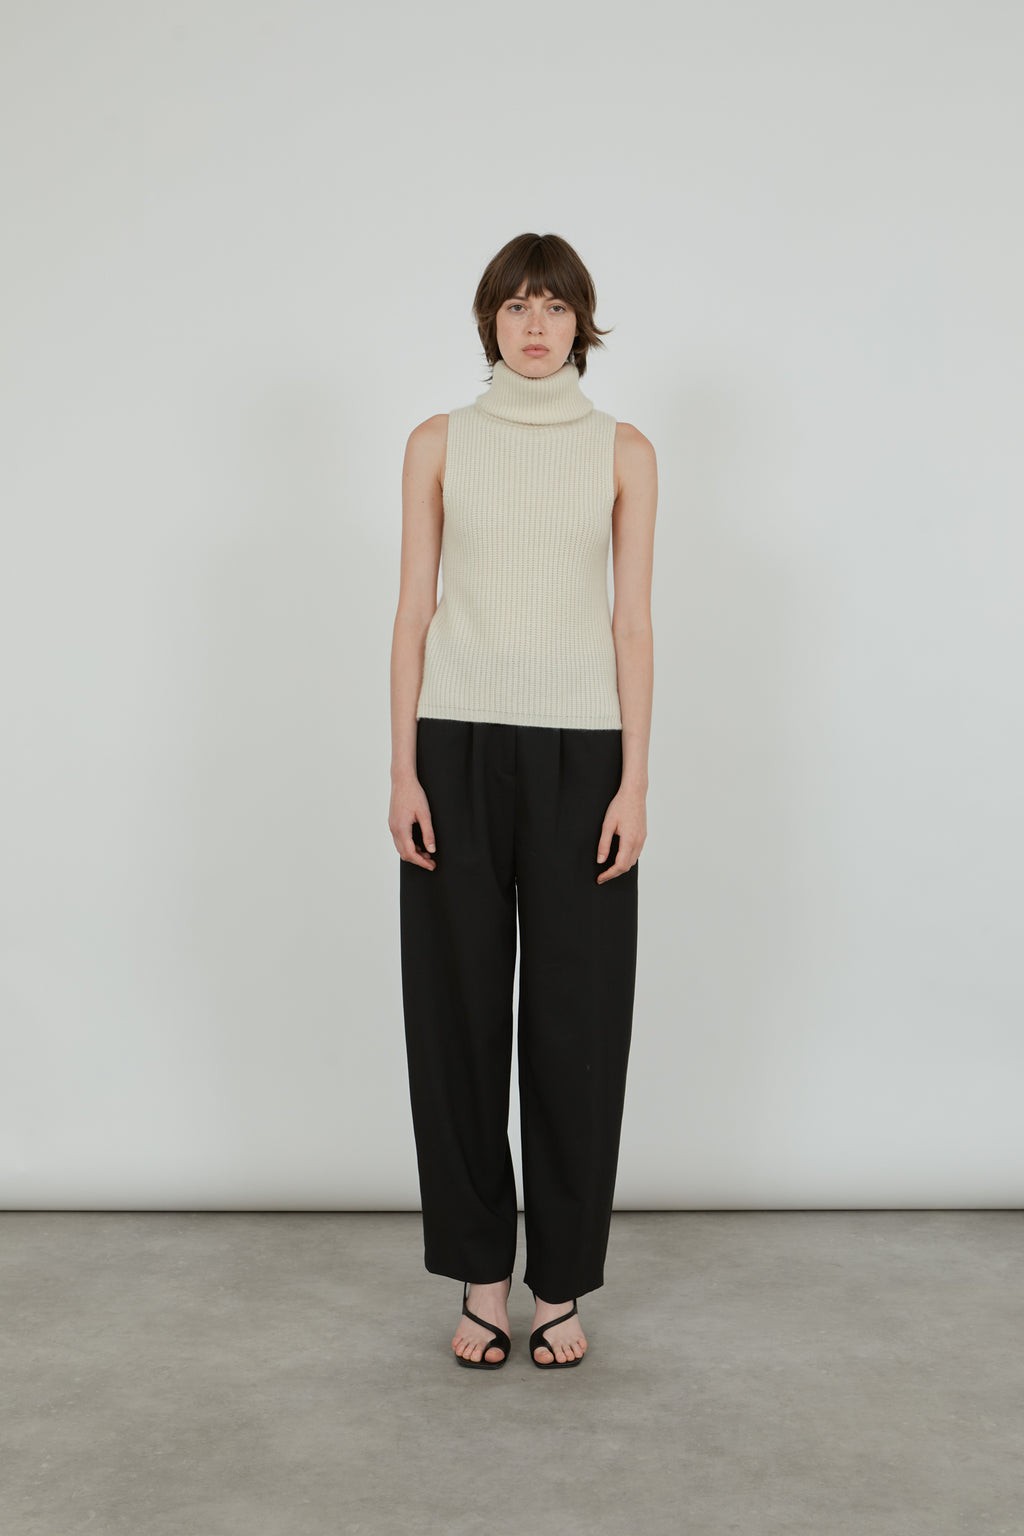 Deborah chunky knit | Off White - Cashmere